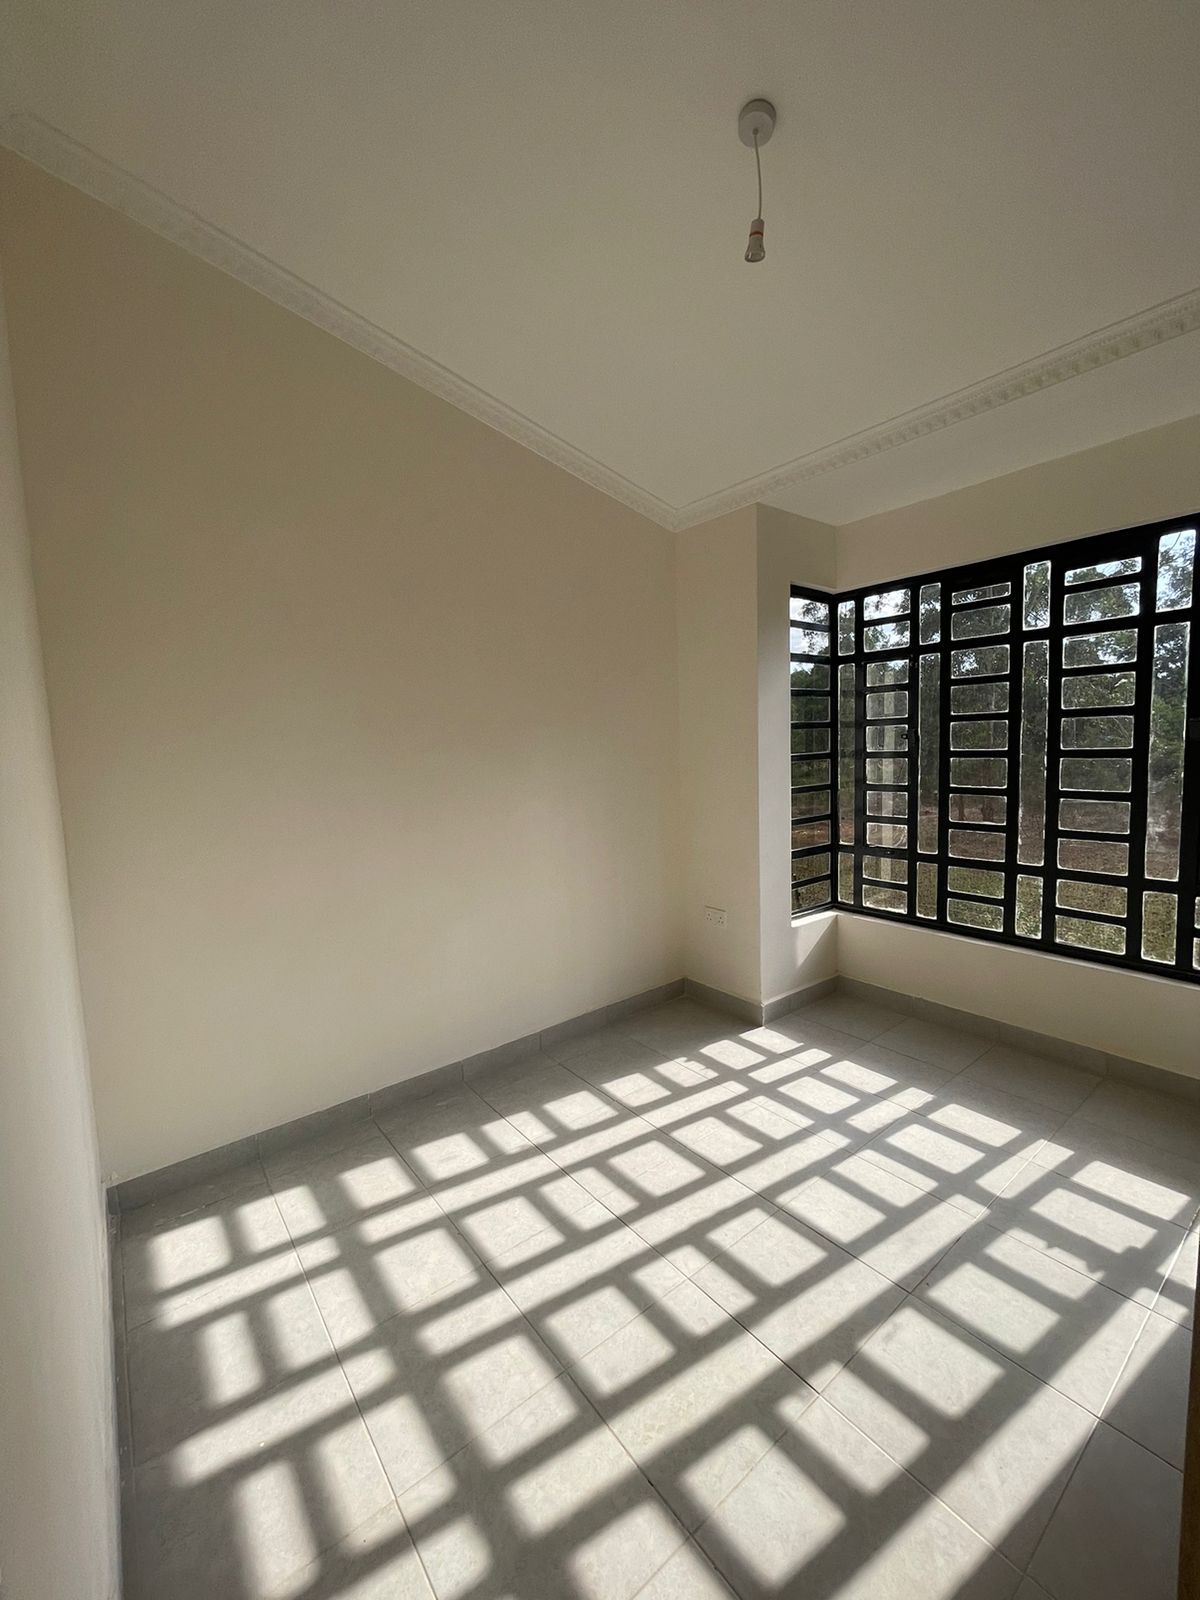 3 bedroom Maisonette for sale at 9M in Gikambura, Kikuyu. Has payment plan; Cash or Mortgage, Deposit 1M. Musilli Homes